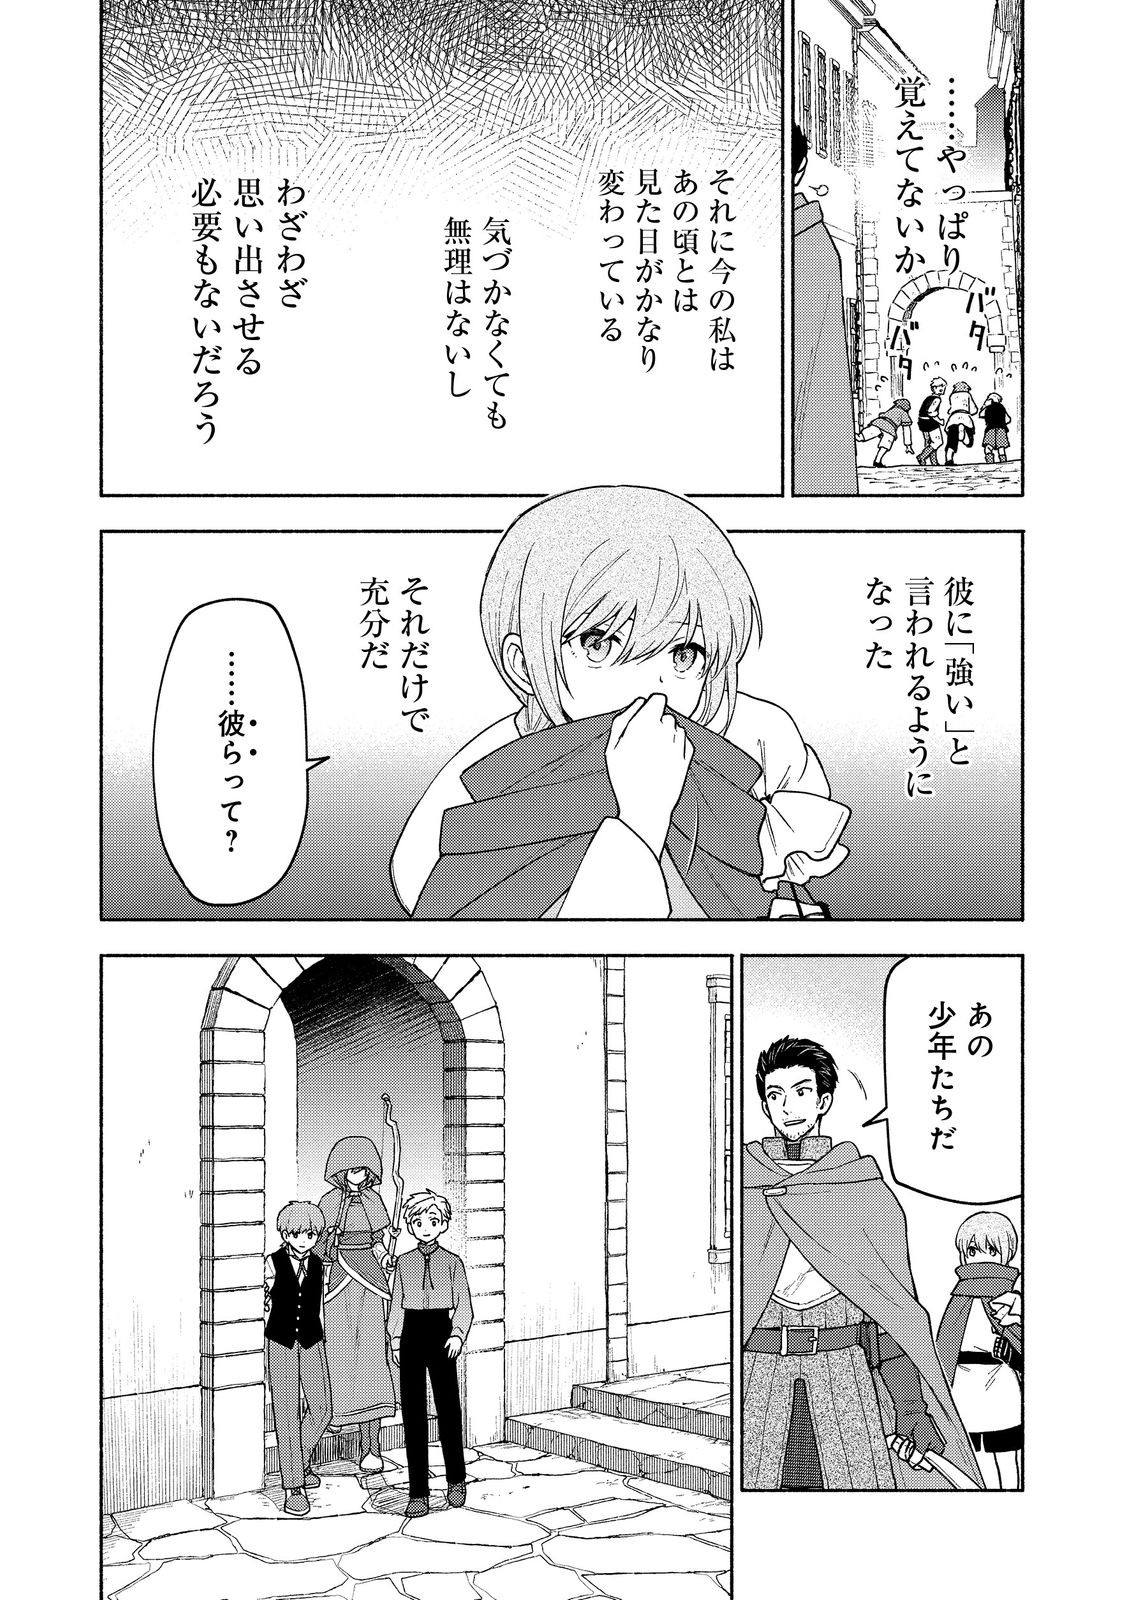 Otome Game no Heroine de Saikyou Survival - Chapter 22 - Page 4